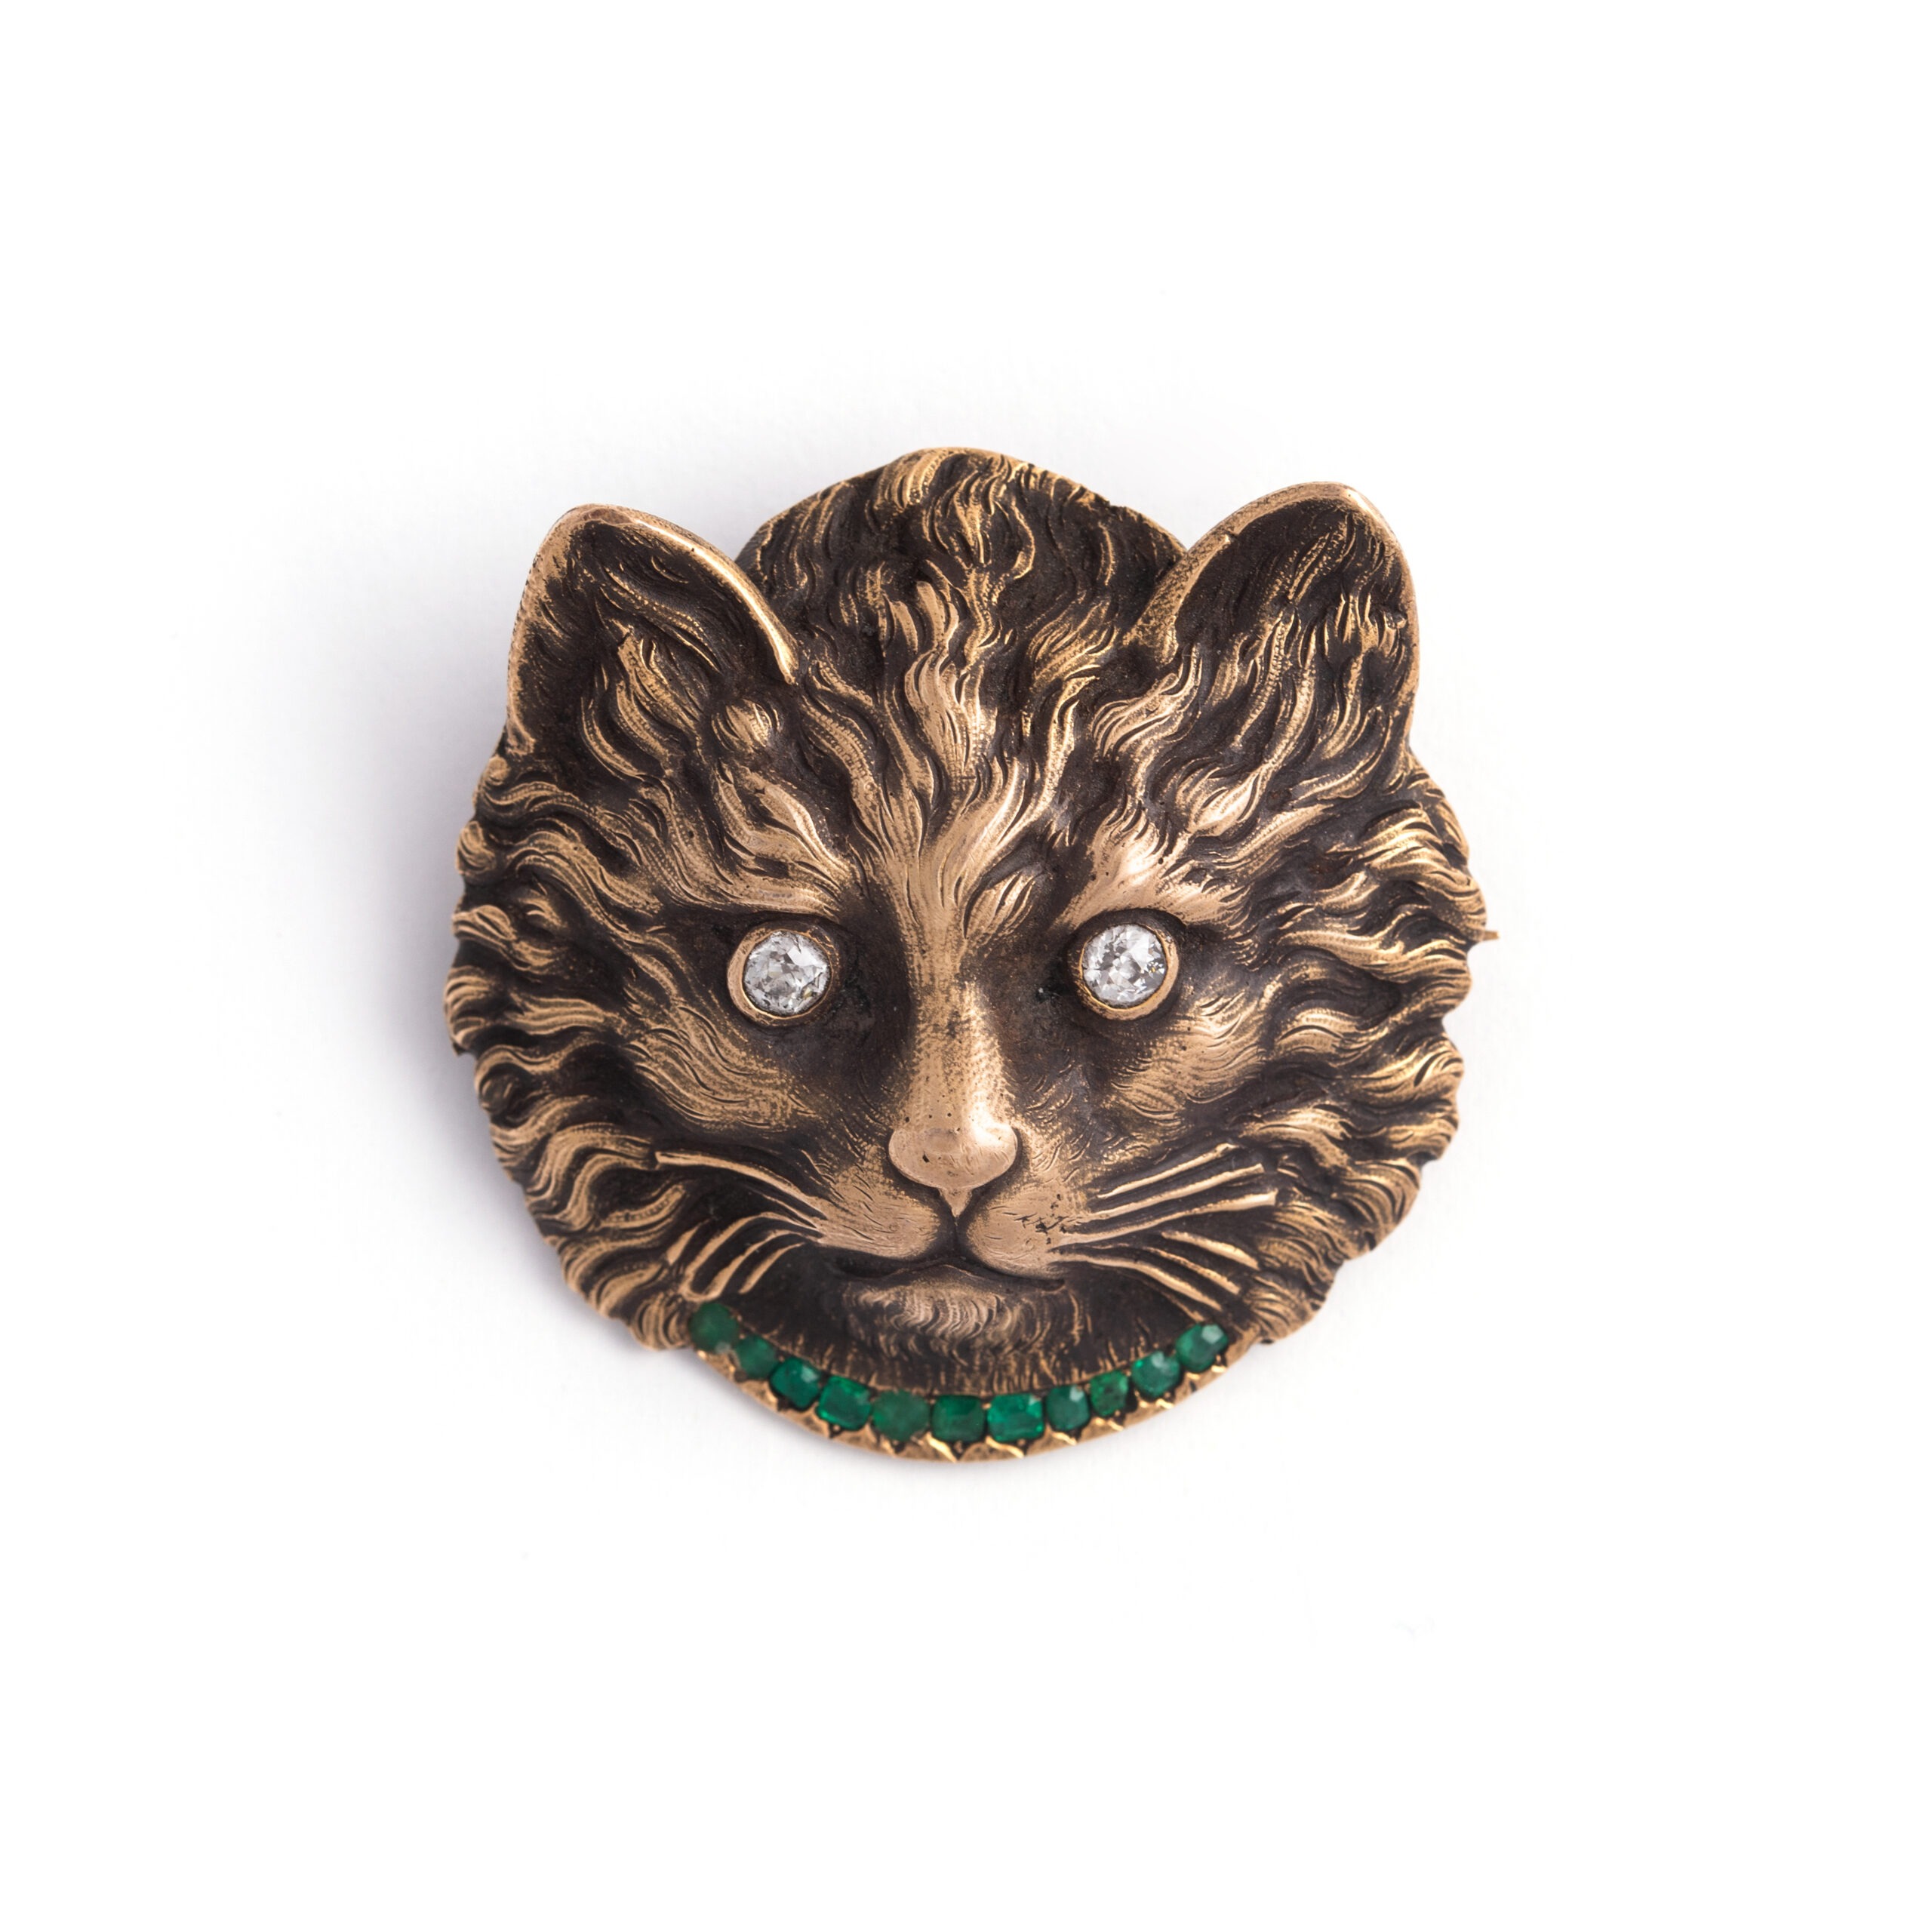 Cat's face Diamond Emerald Brooch Early 20th Century